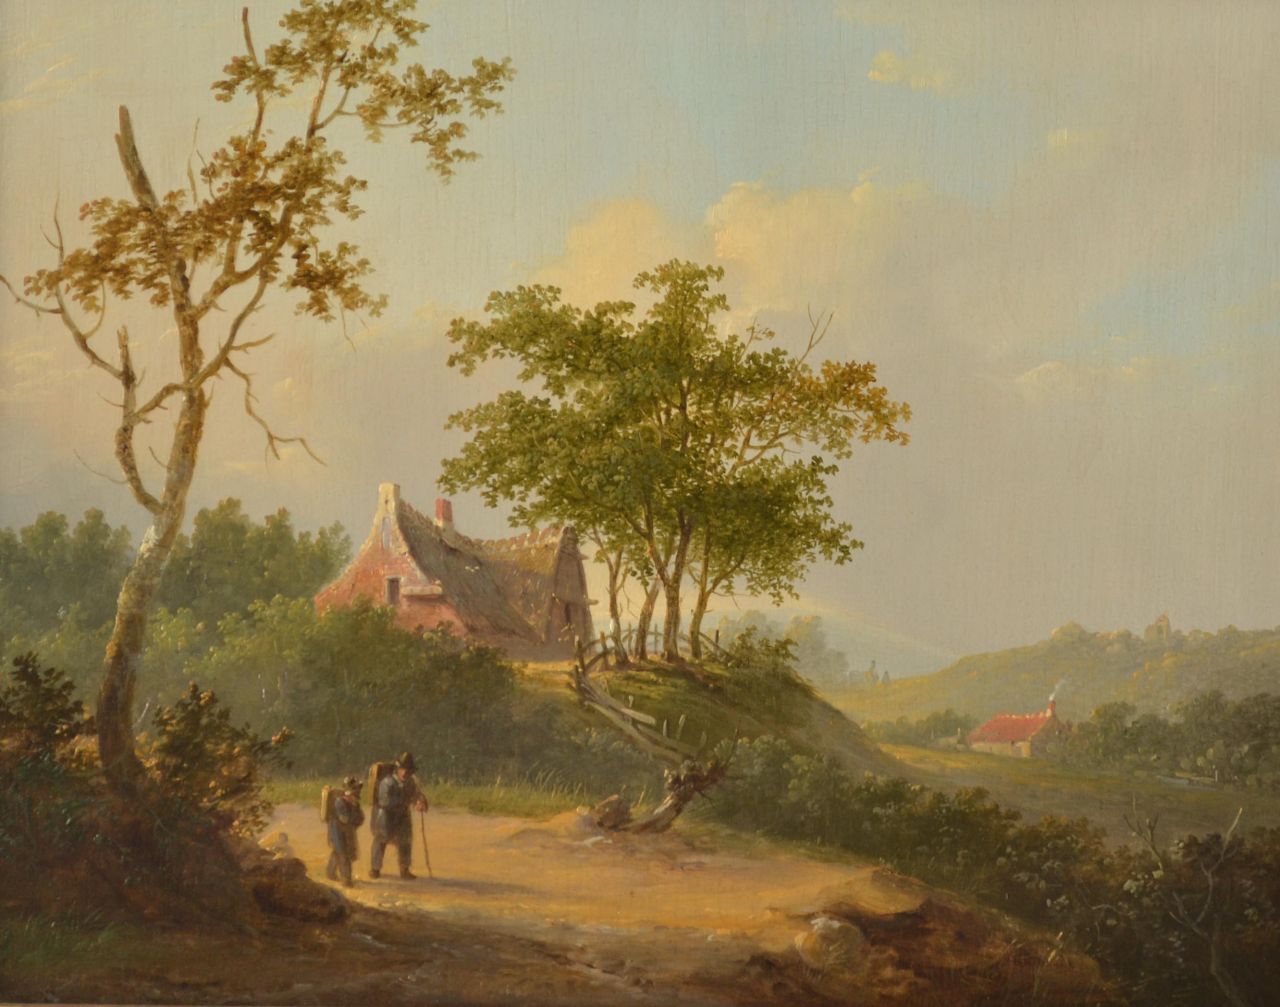 Stok J. van der | Jacobus van der Stok | Paintings offered for sale | Travellers in an extensive summer landscape, oil on panel 25.7 x 32.6 cm